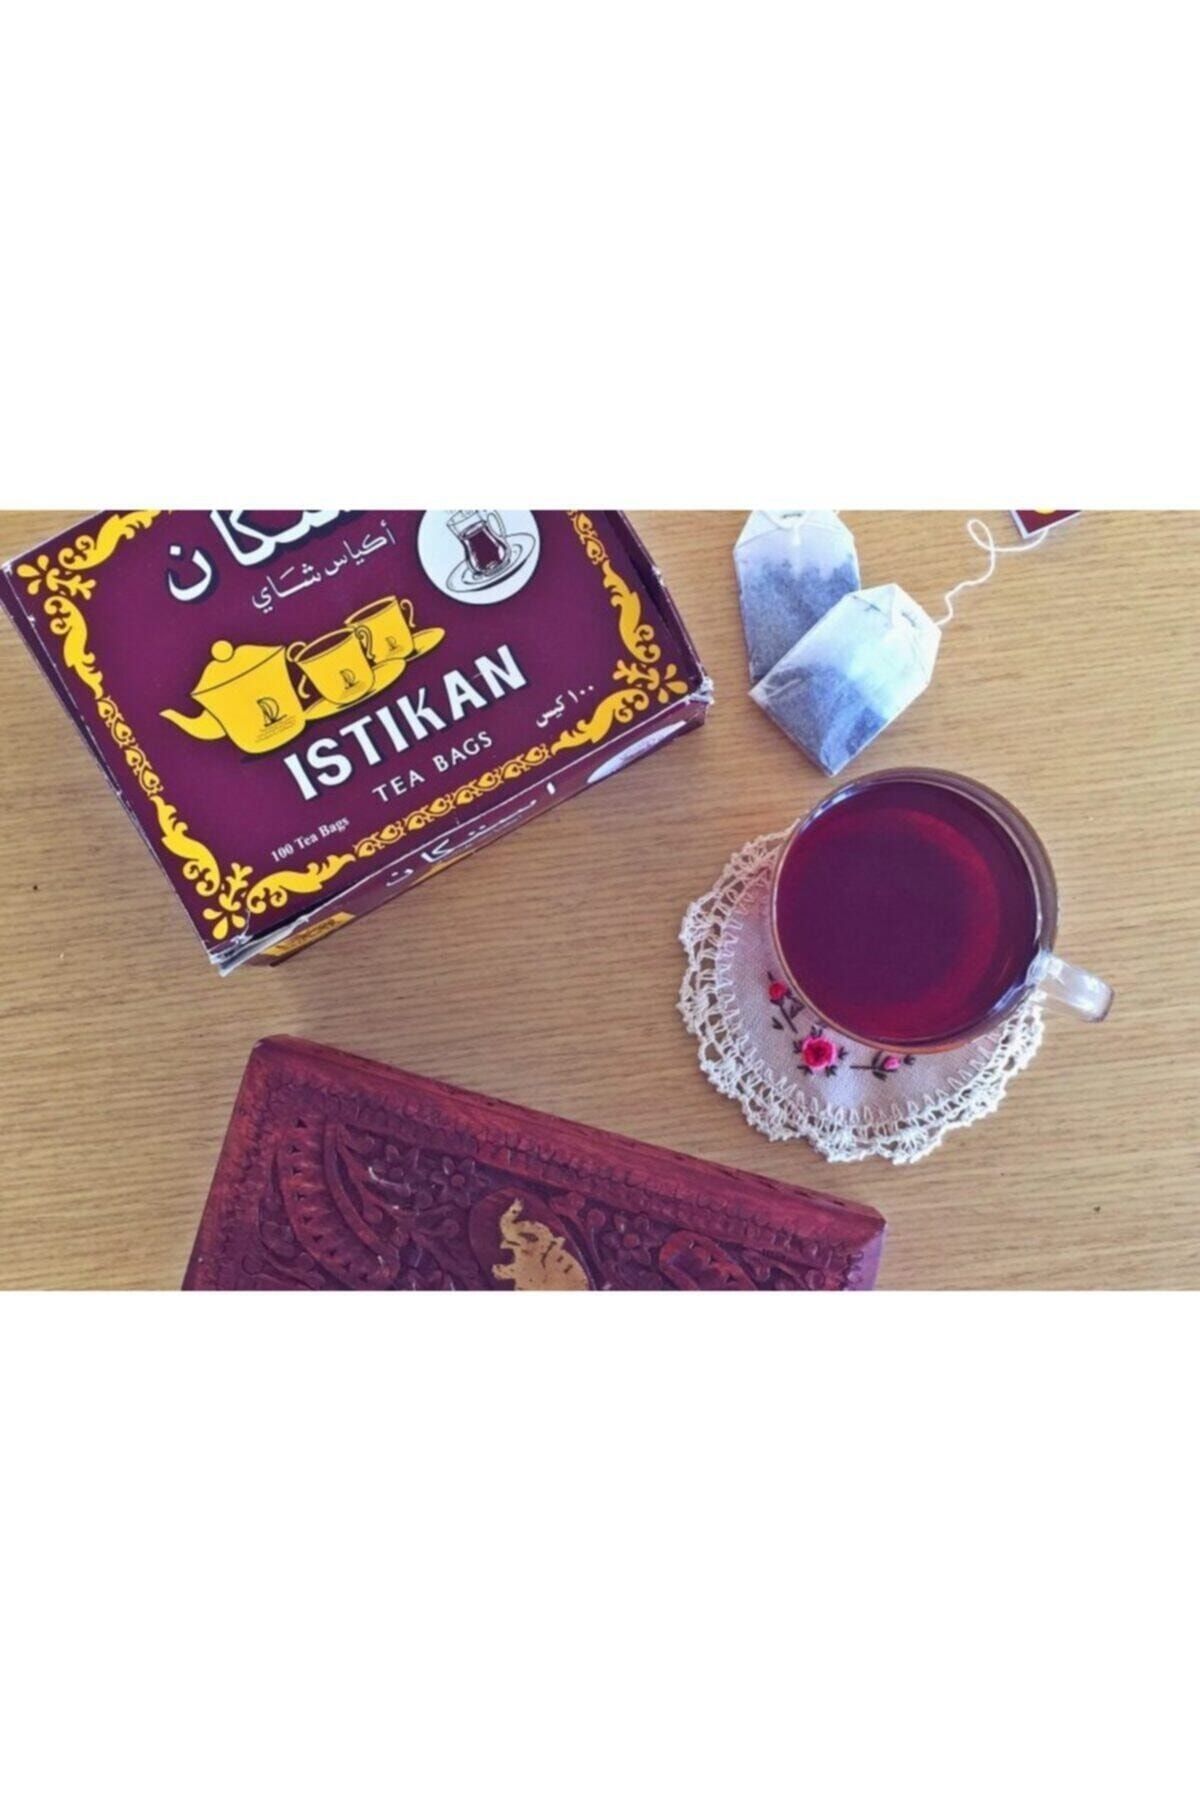 İSTİKAN Şanlı Isot Sarayı Istıkan Tea Sallama Çay 2 Paket [200 Adet]